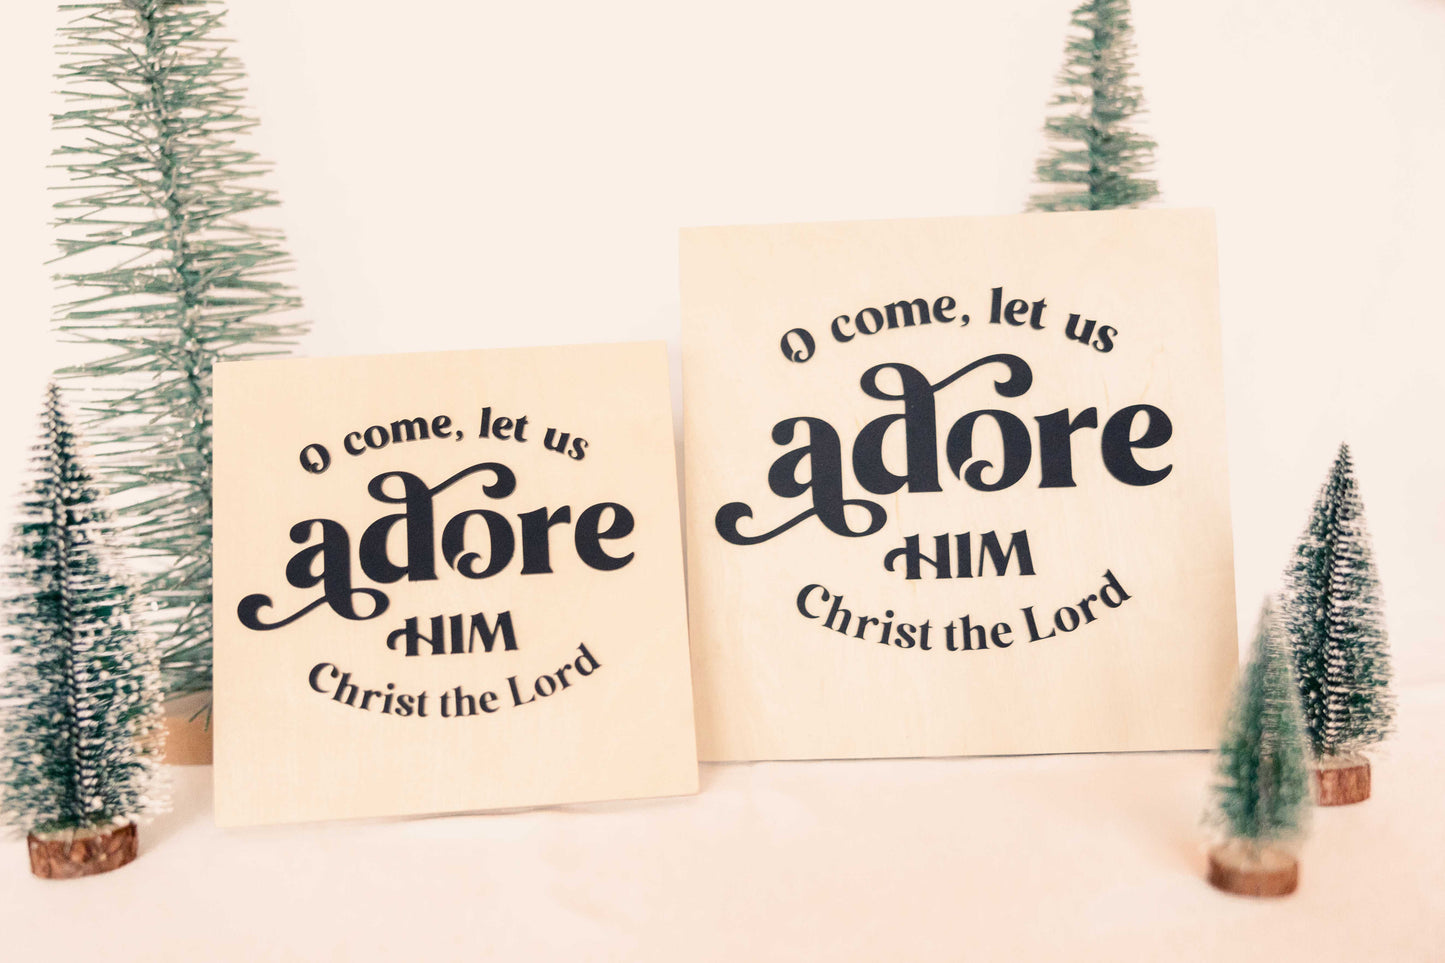 O come, let us adore Him